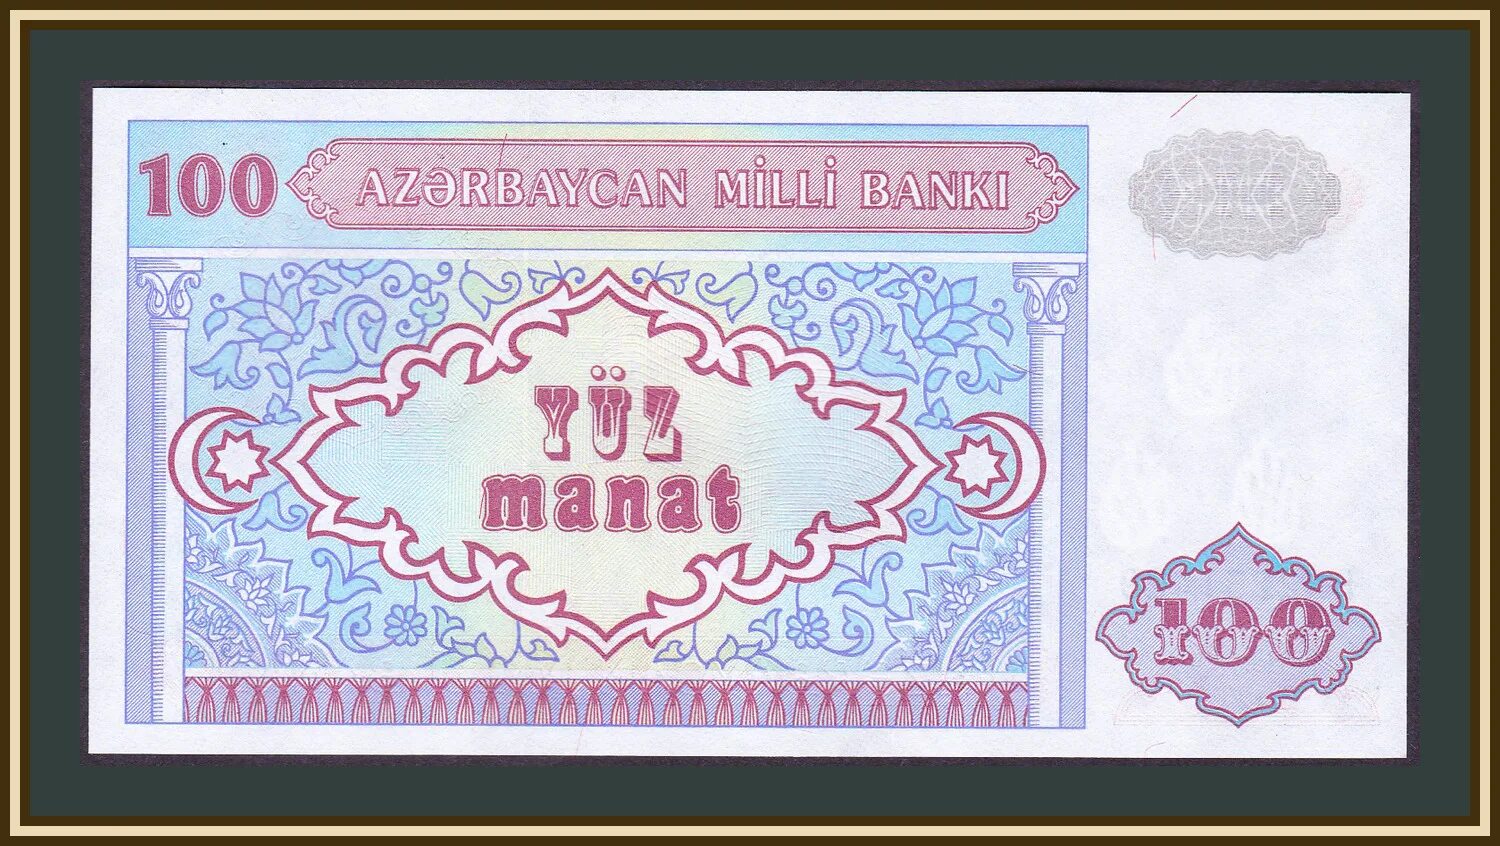 Азербайджанская денежная единица. 100 Манат Азербайджан. Азербайджанский манат купюры. Азербайджан банкнота 100 манат. Азербайджанские деньги старые.